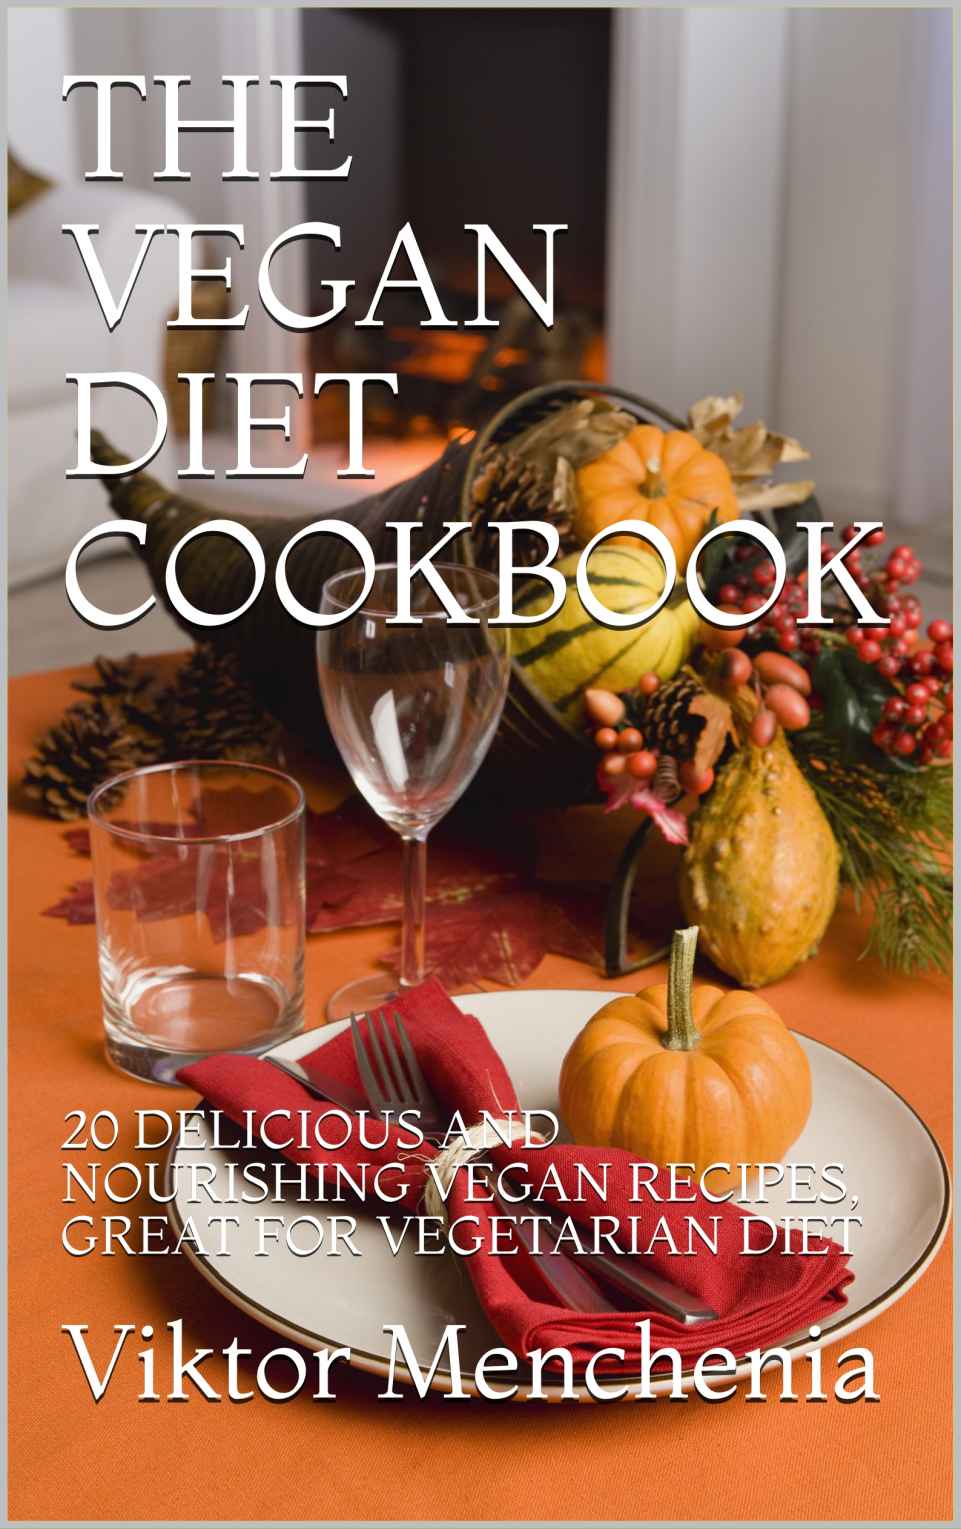 FREE: THE VEGAN DIET COOKBOOK: 20 DELICIOUS AND NOURISHING VEGAN RECIPES, GREAT FOR VEGETARIAN DIET by Viktor Menchenia